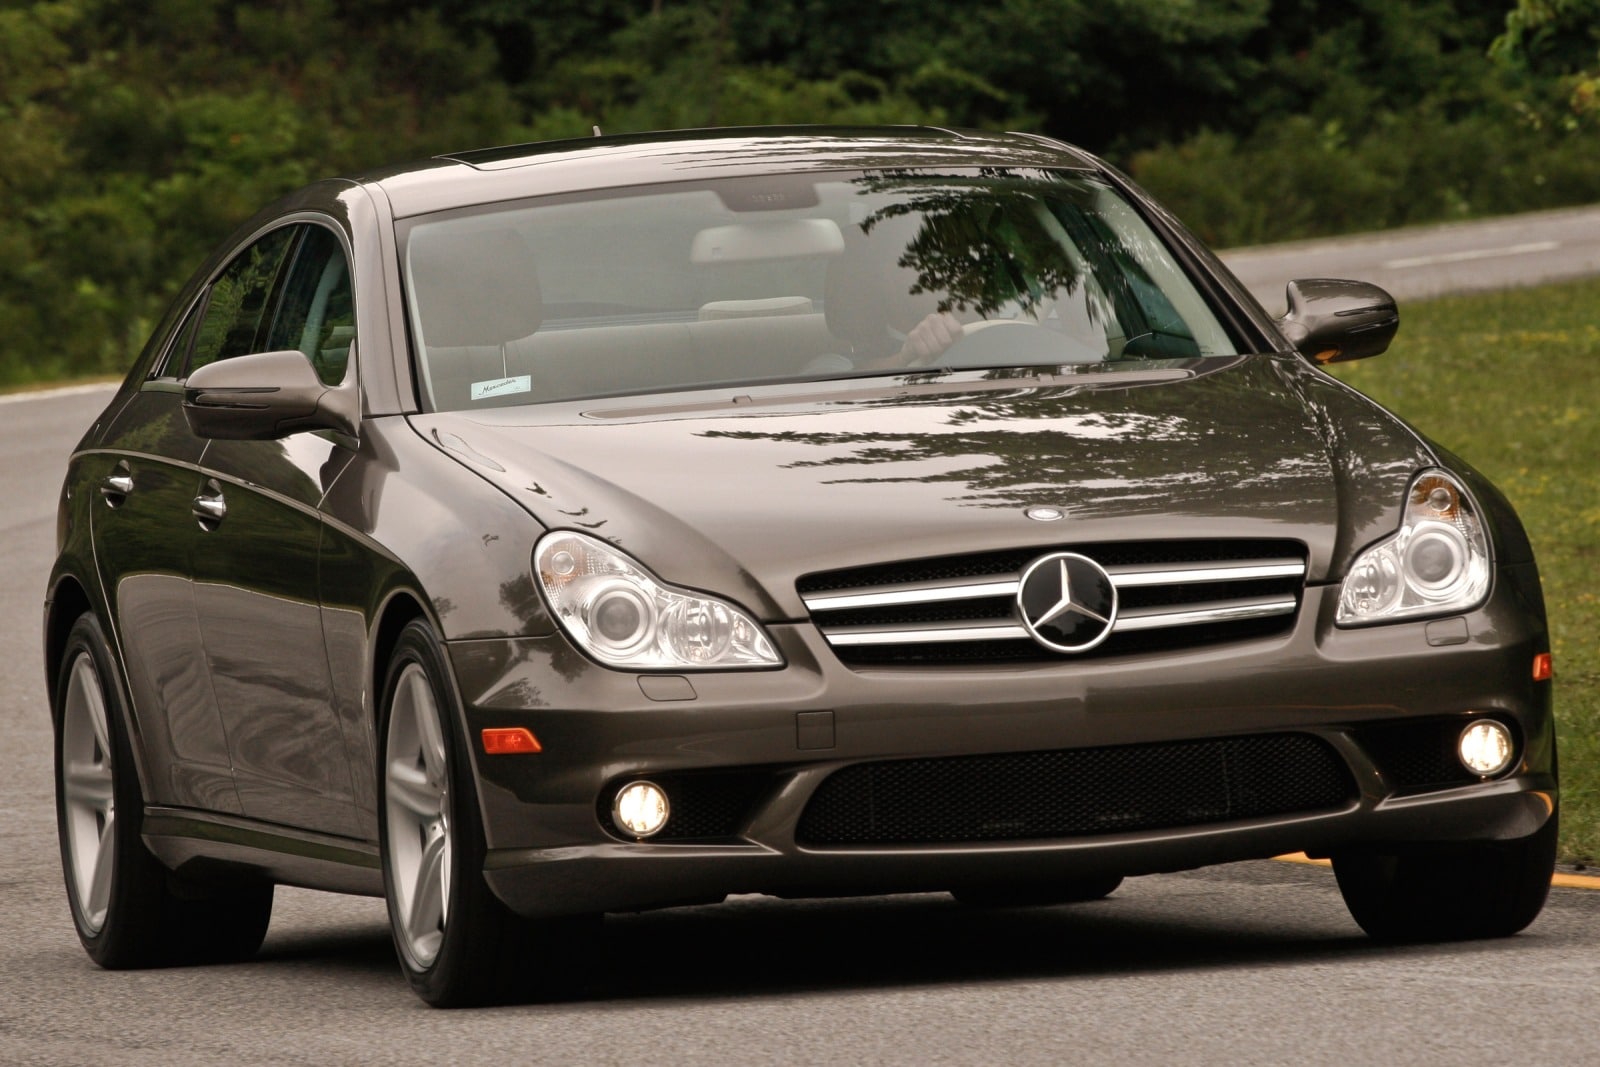 2010 Mercedes-Benz CLS-Class Review & Ratings | Edmunds